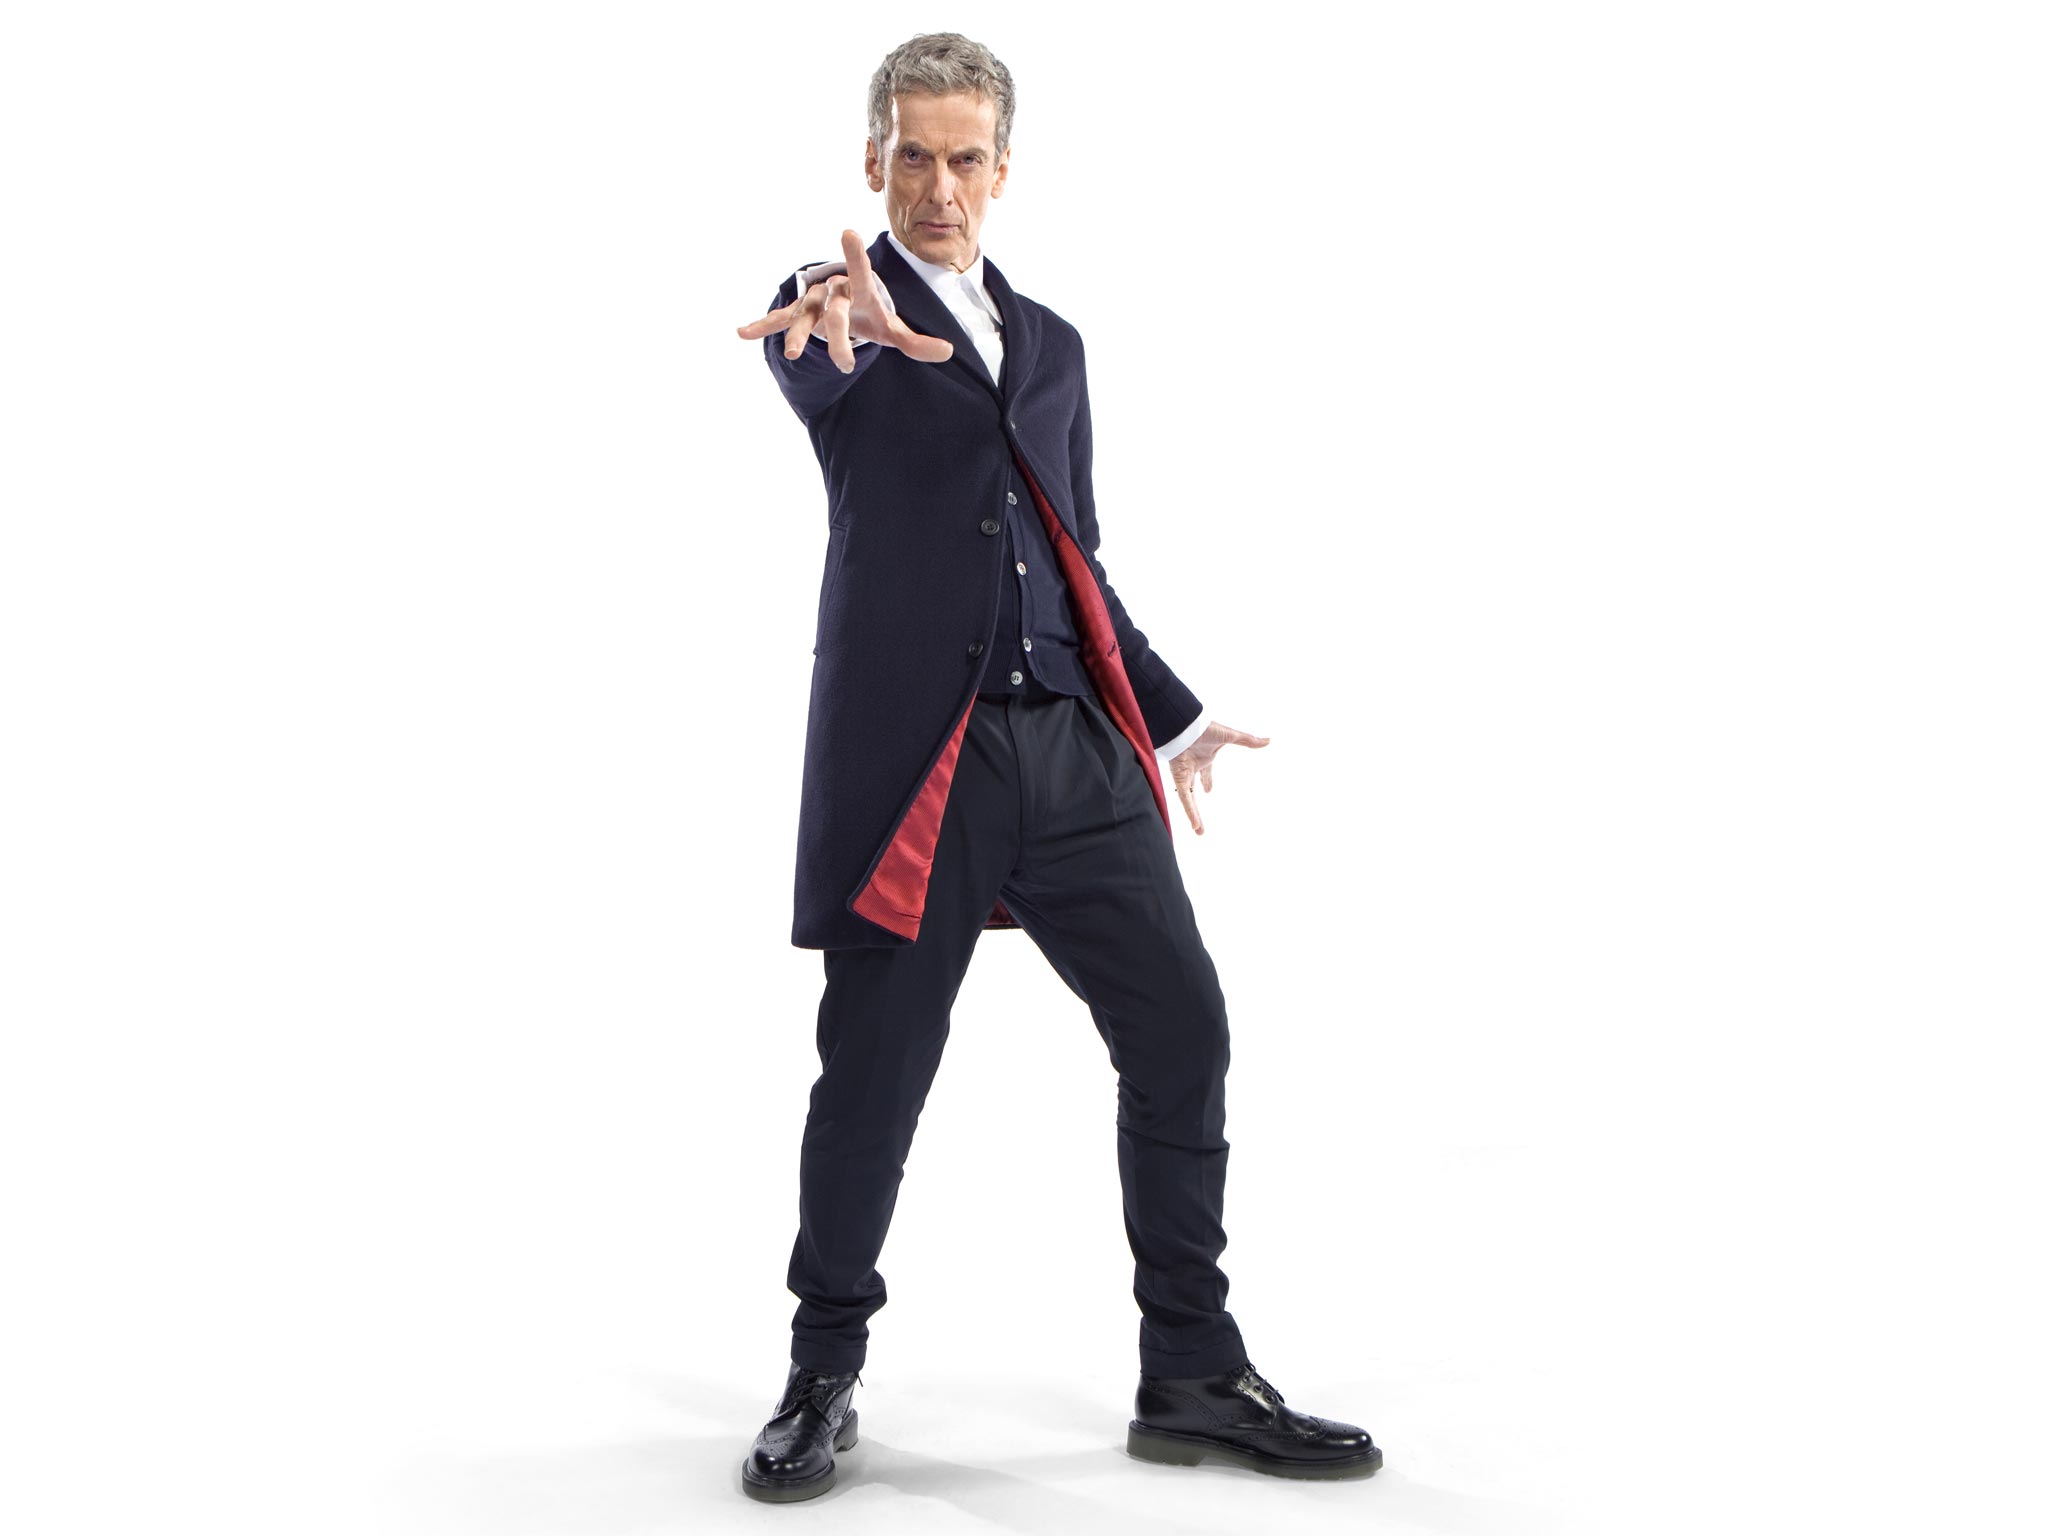 Peter Capaldi as the twelfth Doctor